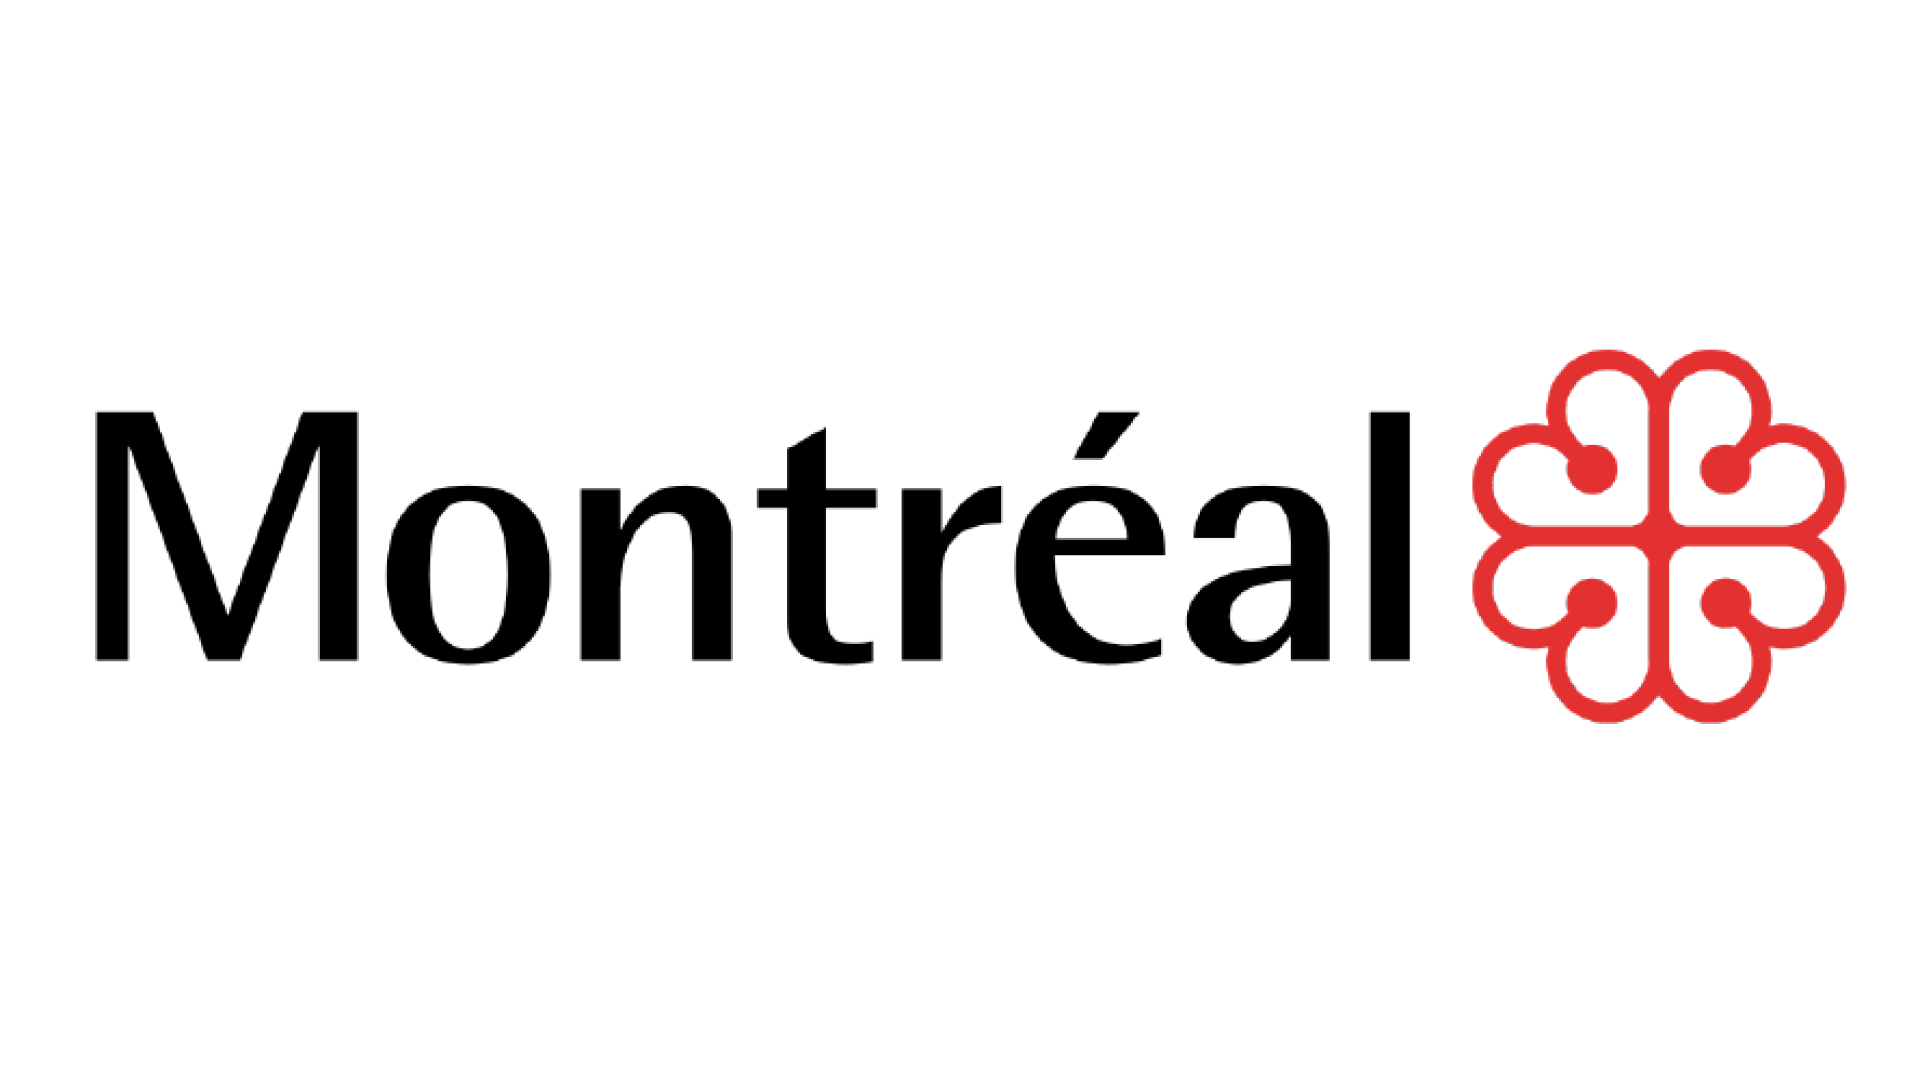 logo montreal